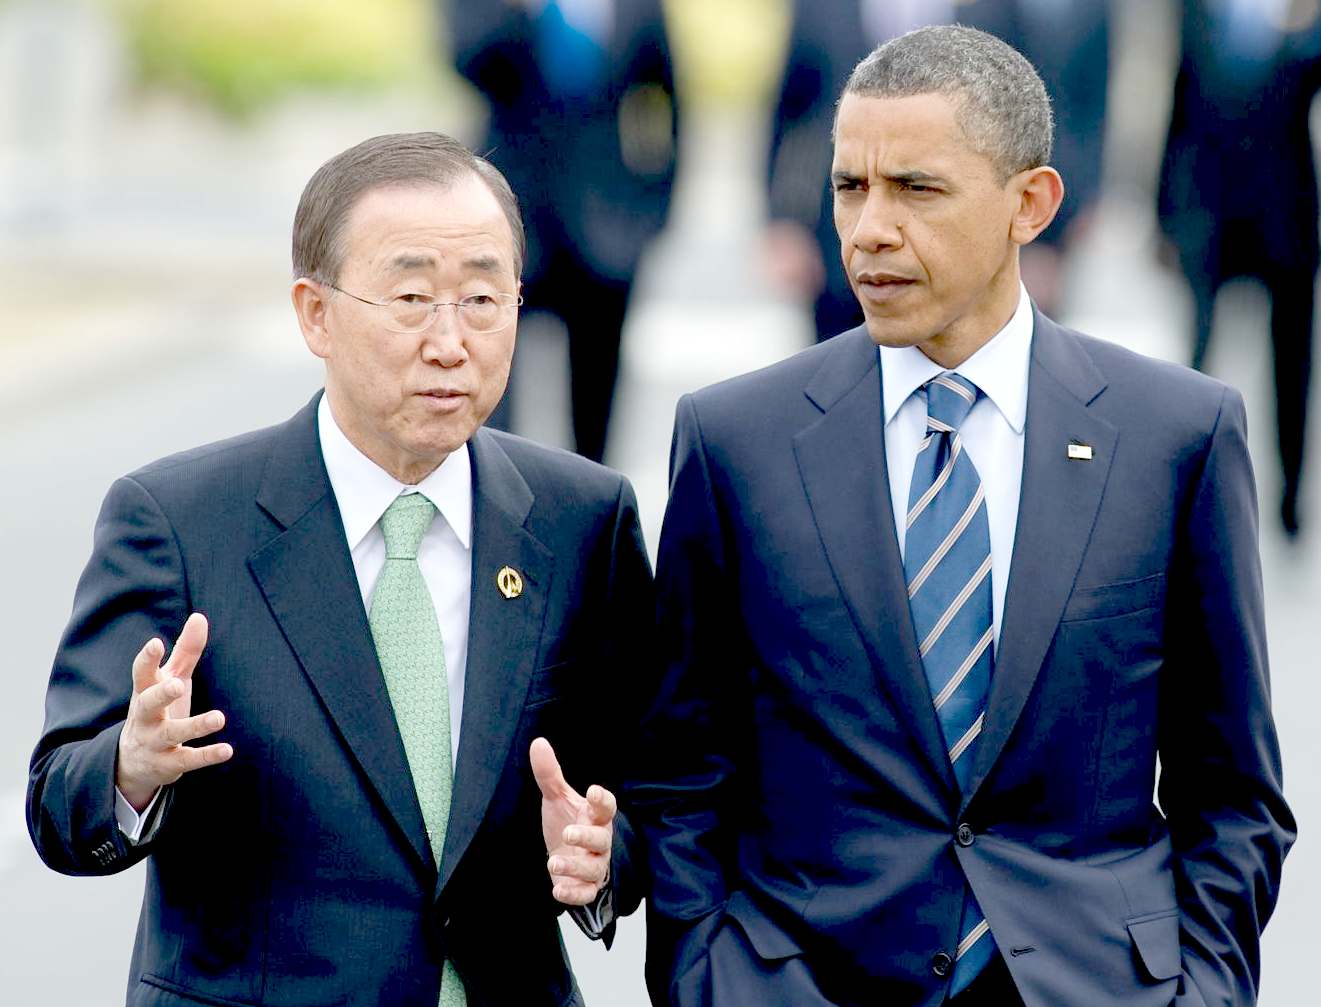 Ban Ki-moon and President Obama